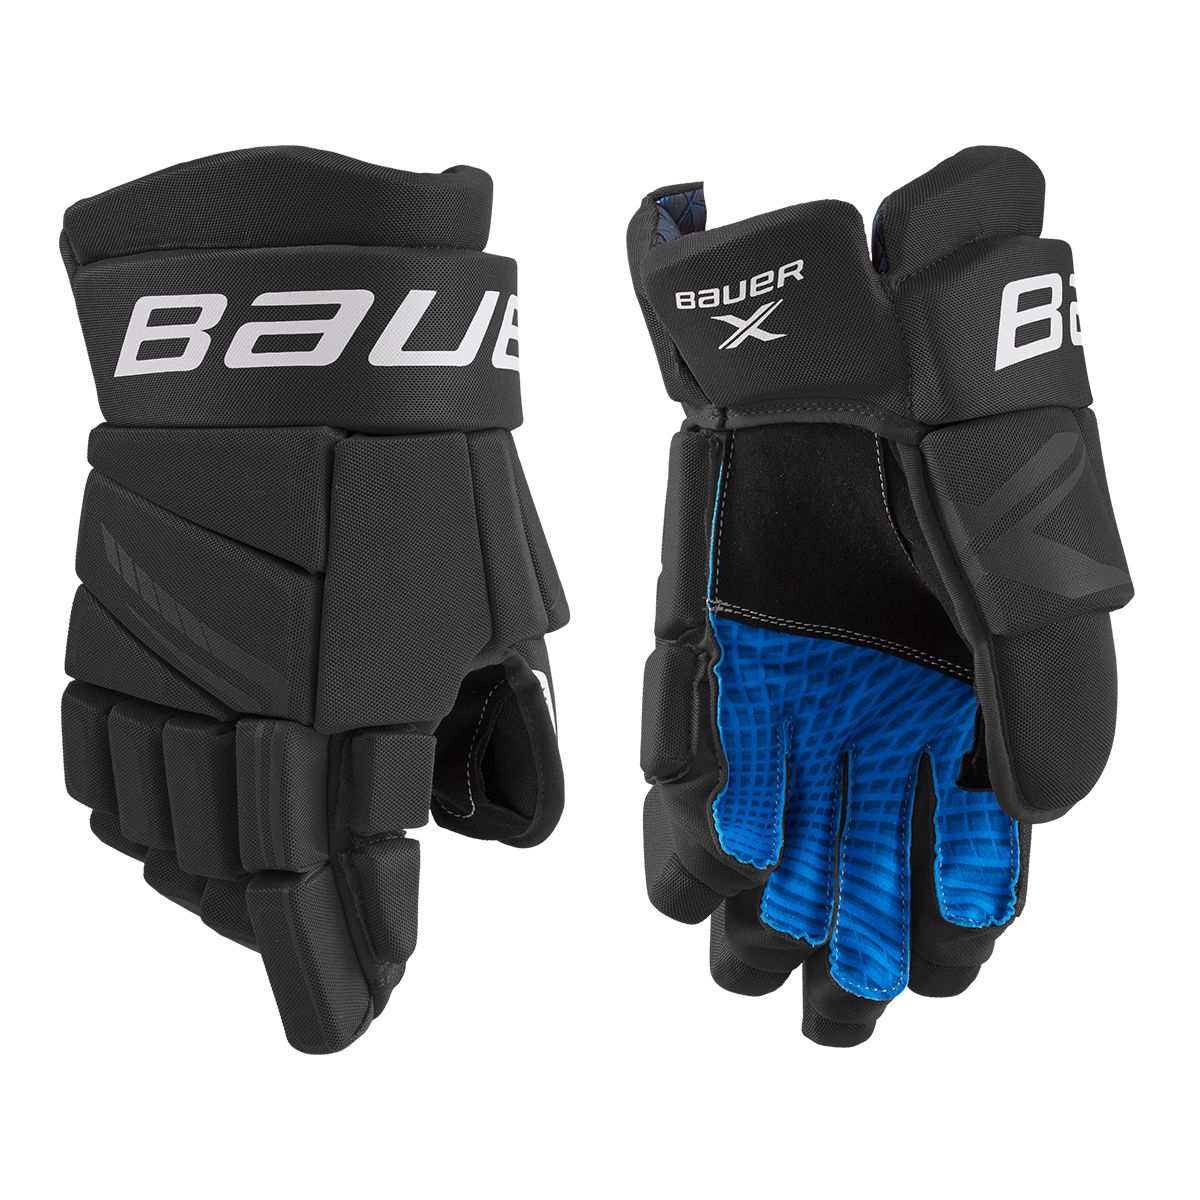 Image of Bauer X Senior Hockey Gloves